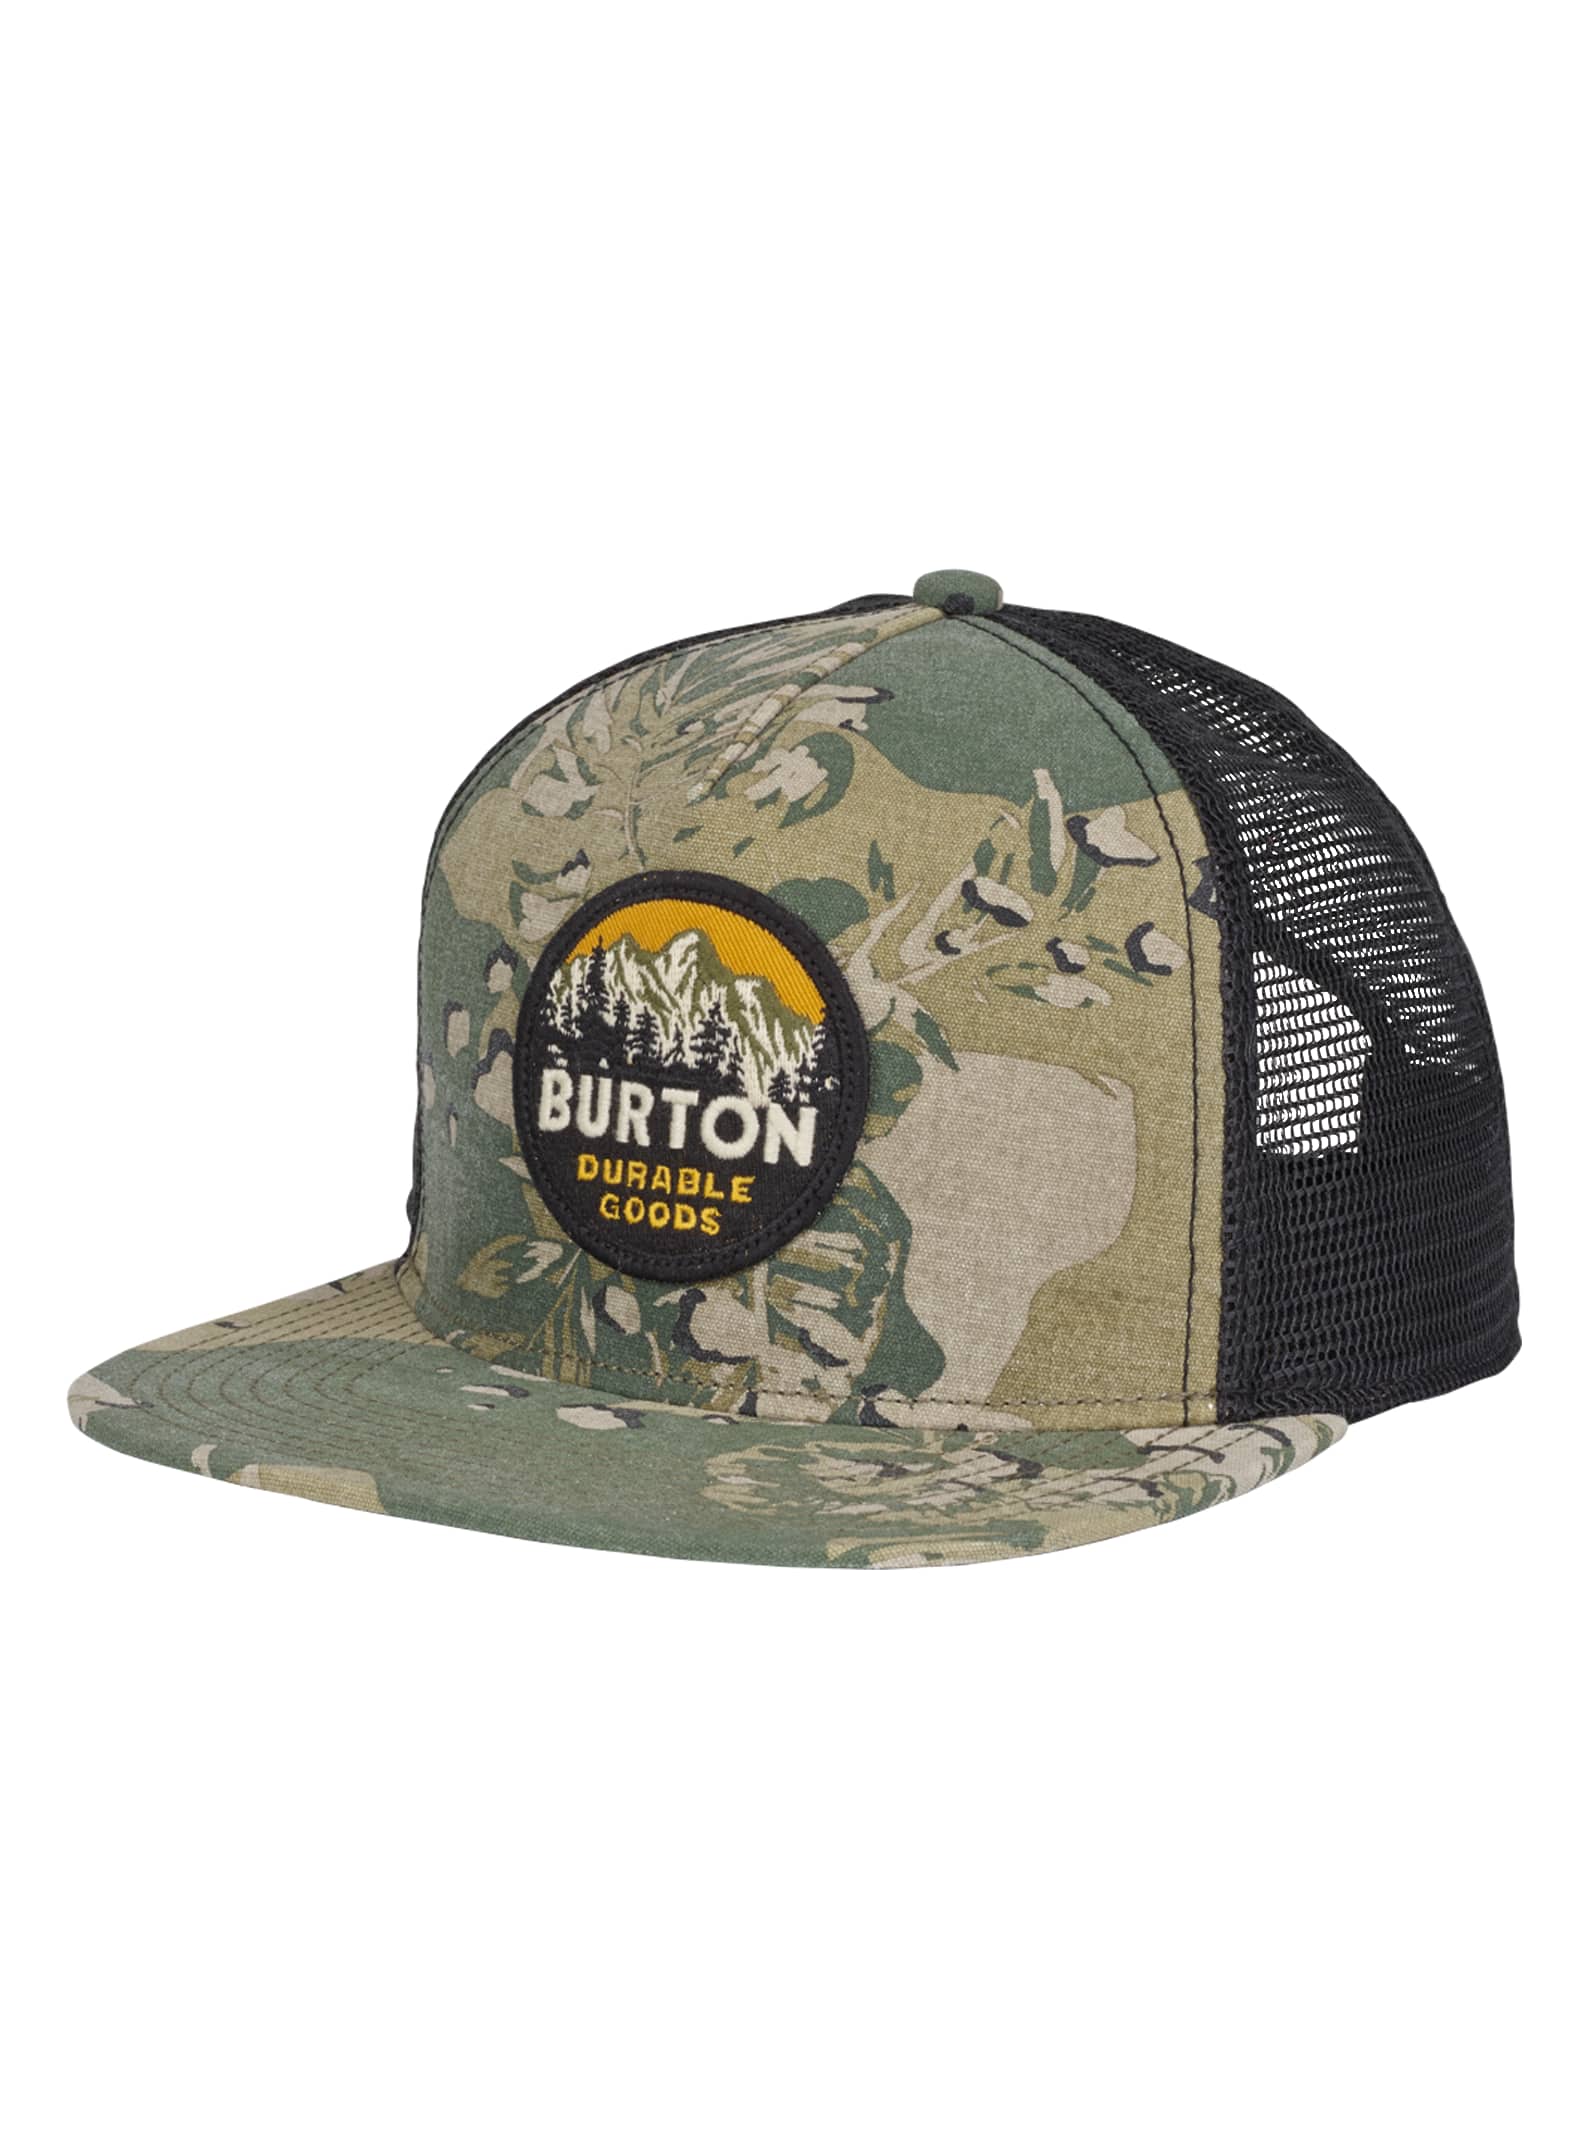 Burton Marble Head Hat | Burton.com Fall 2019 US